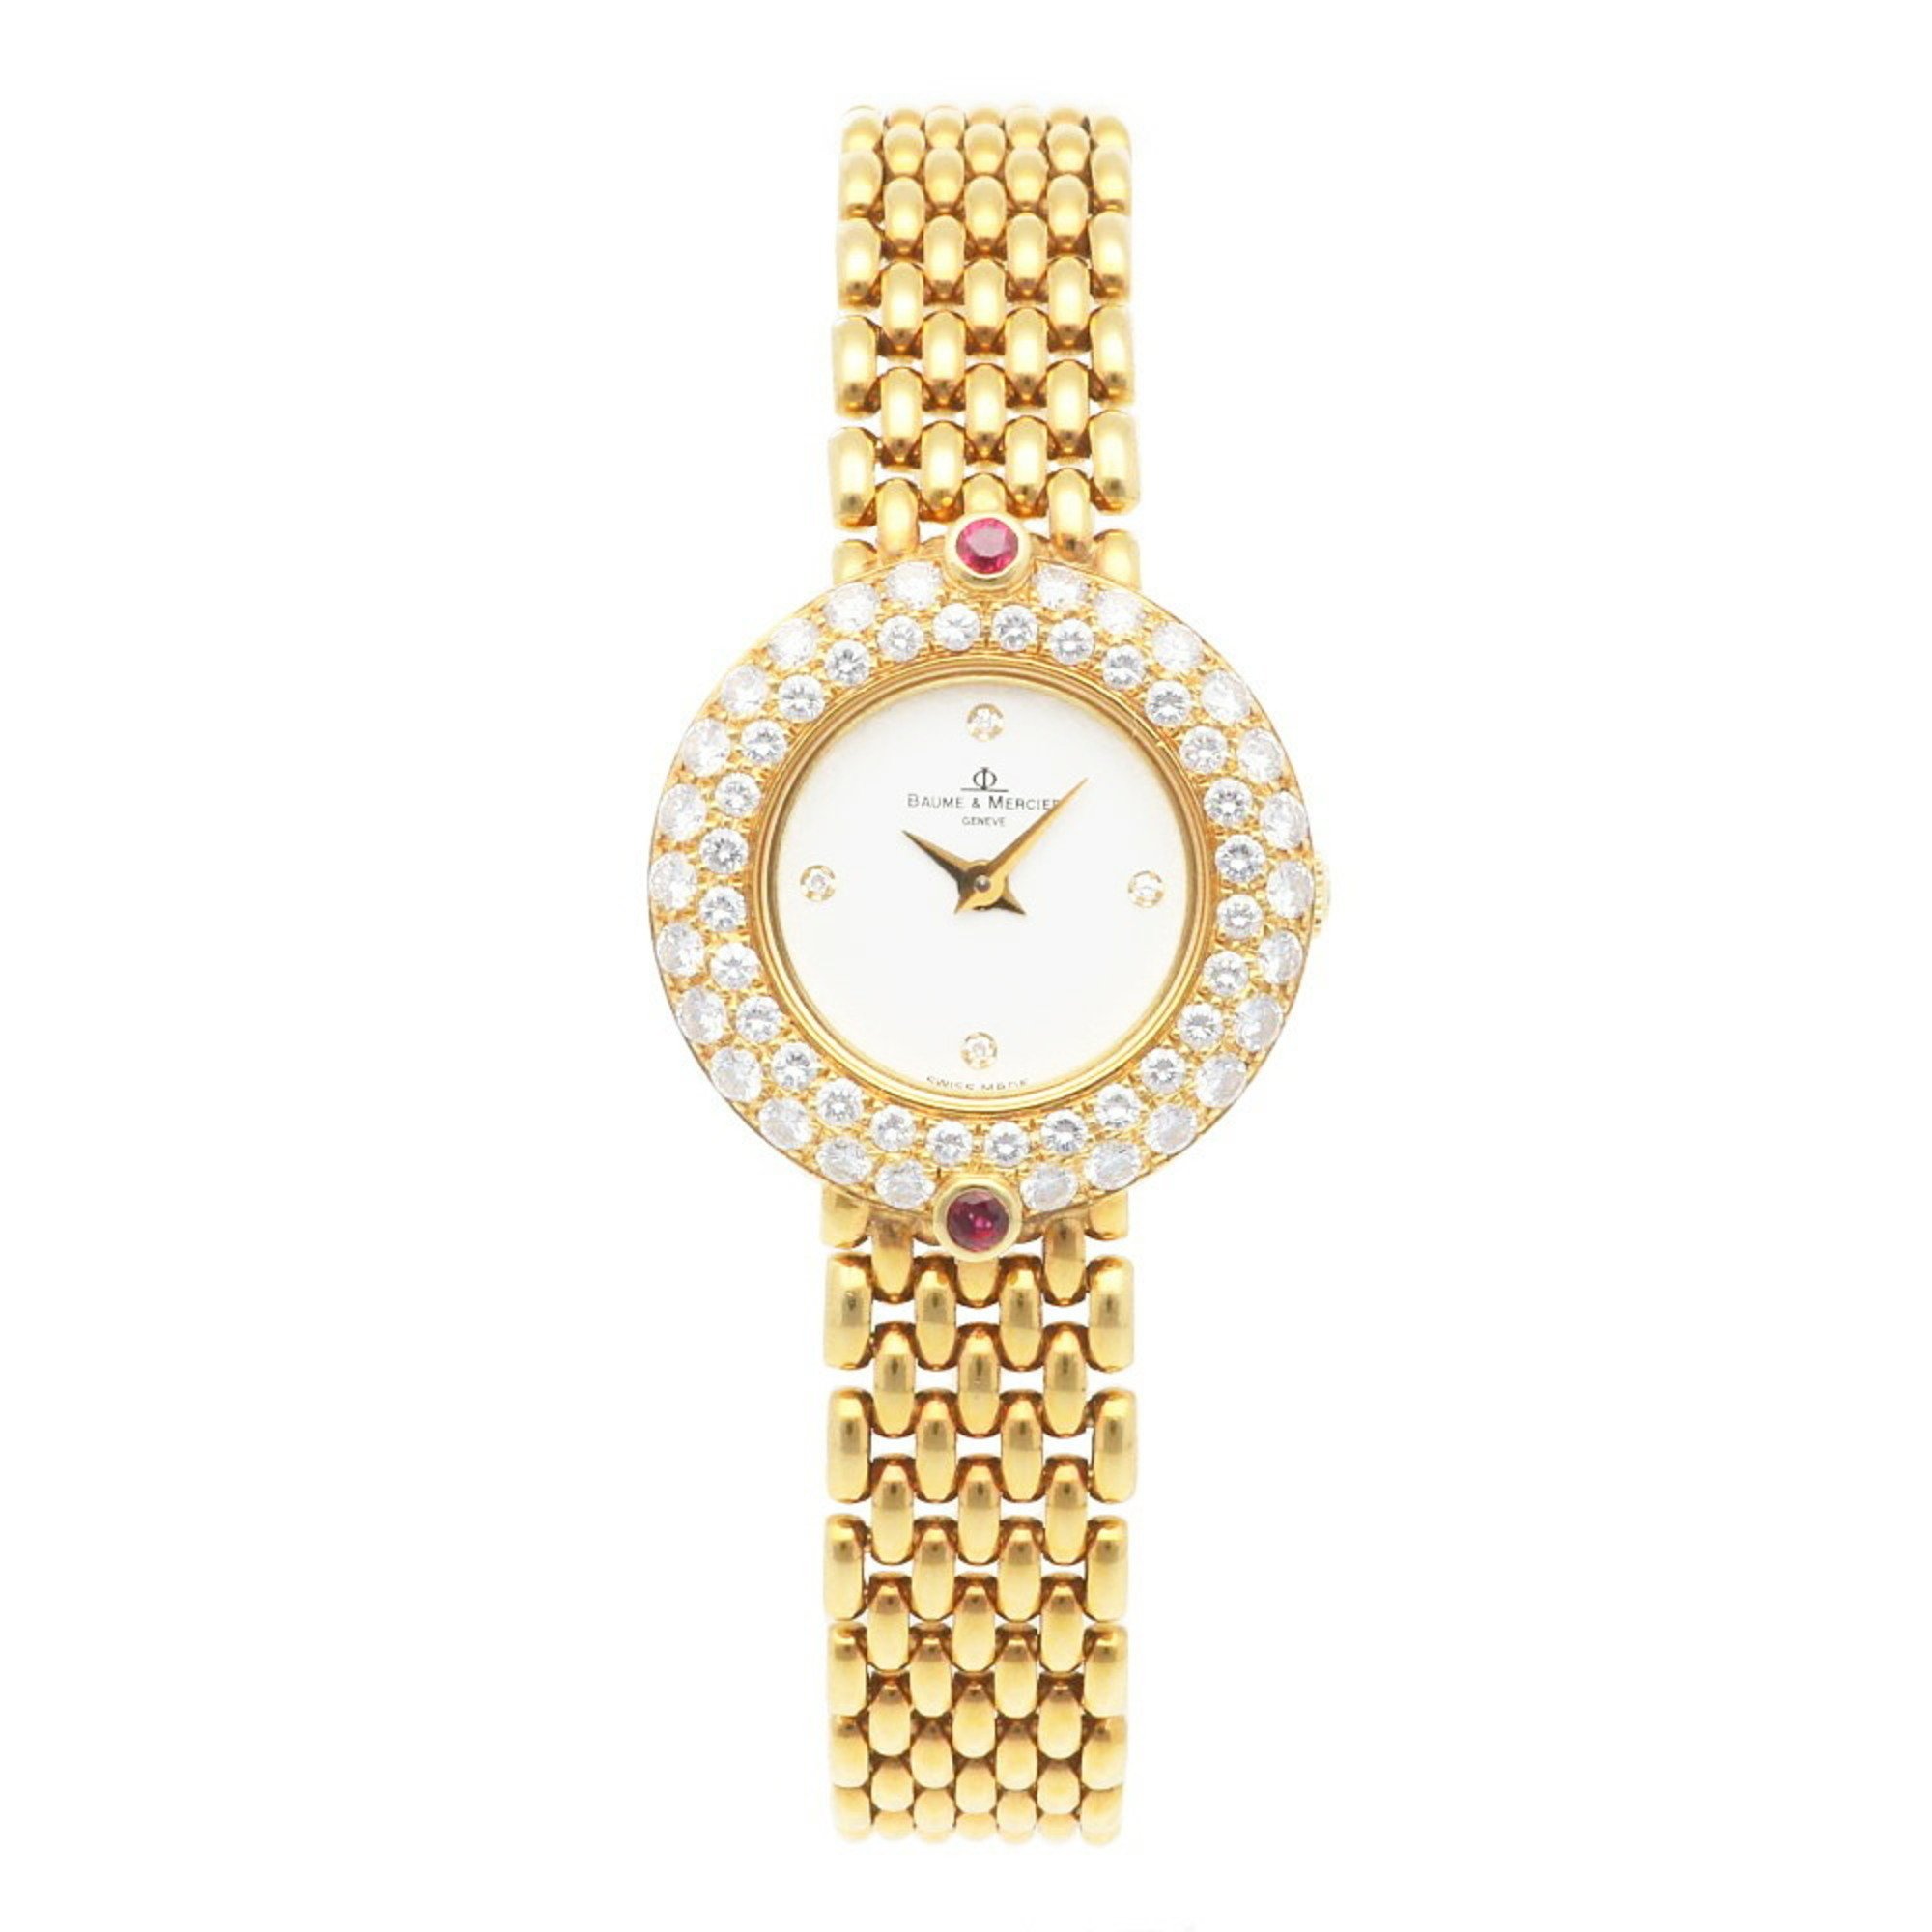 Baume & Mercier Watch 18K 988 16788 Quartz Ladies Diamond Bezel